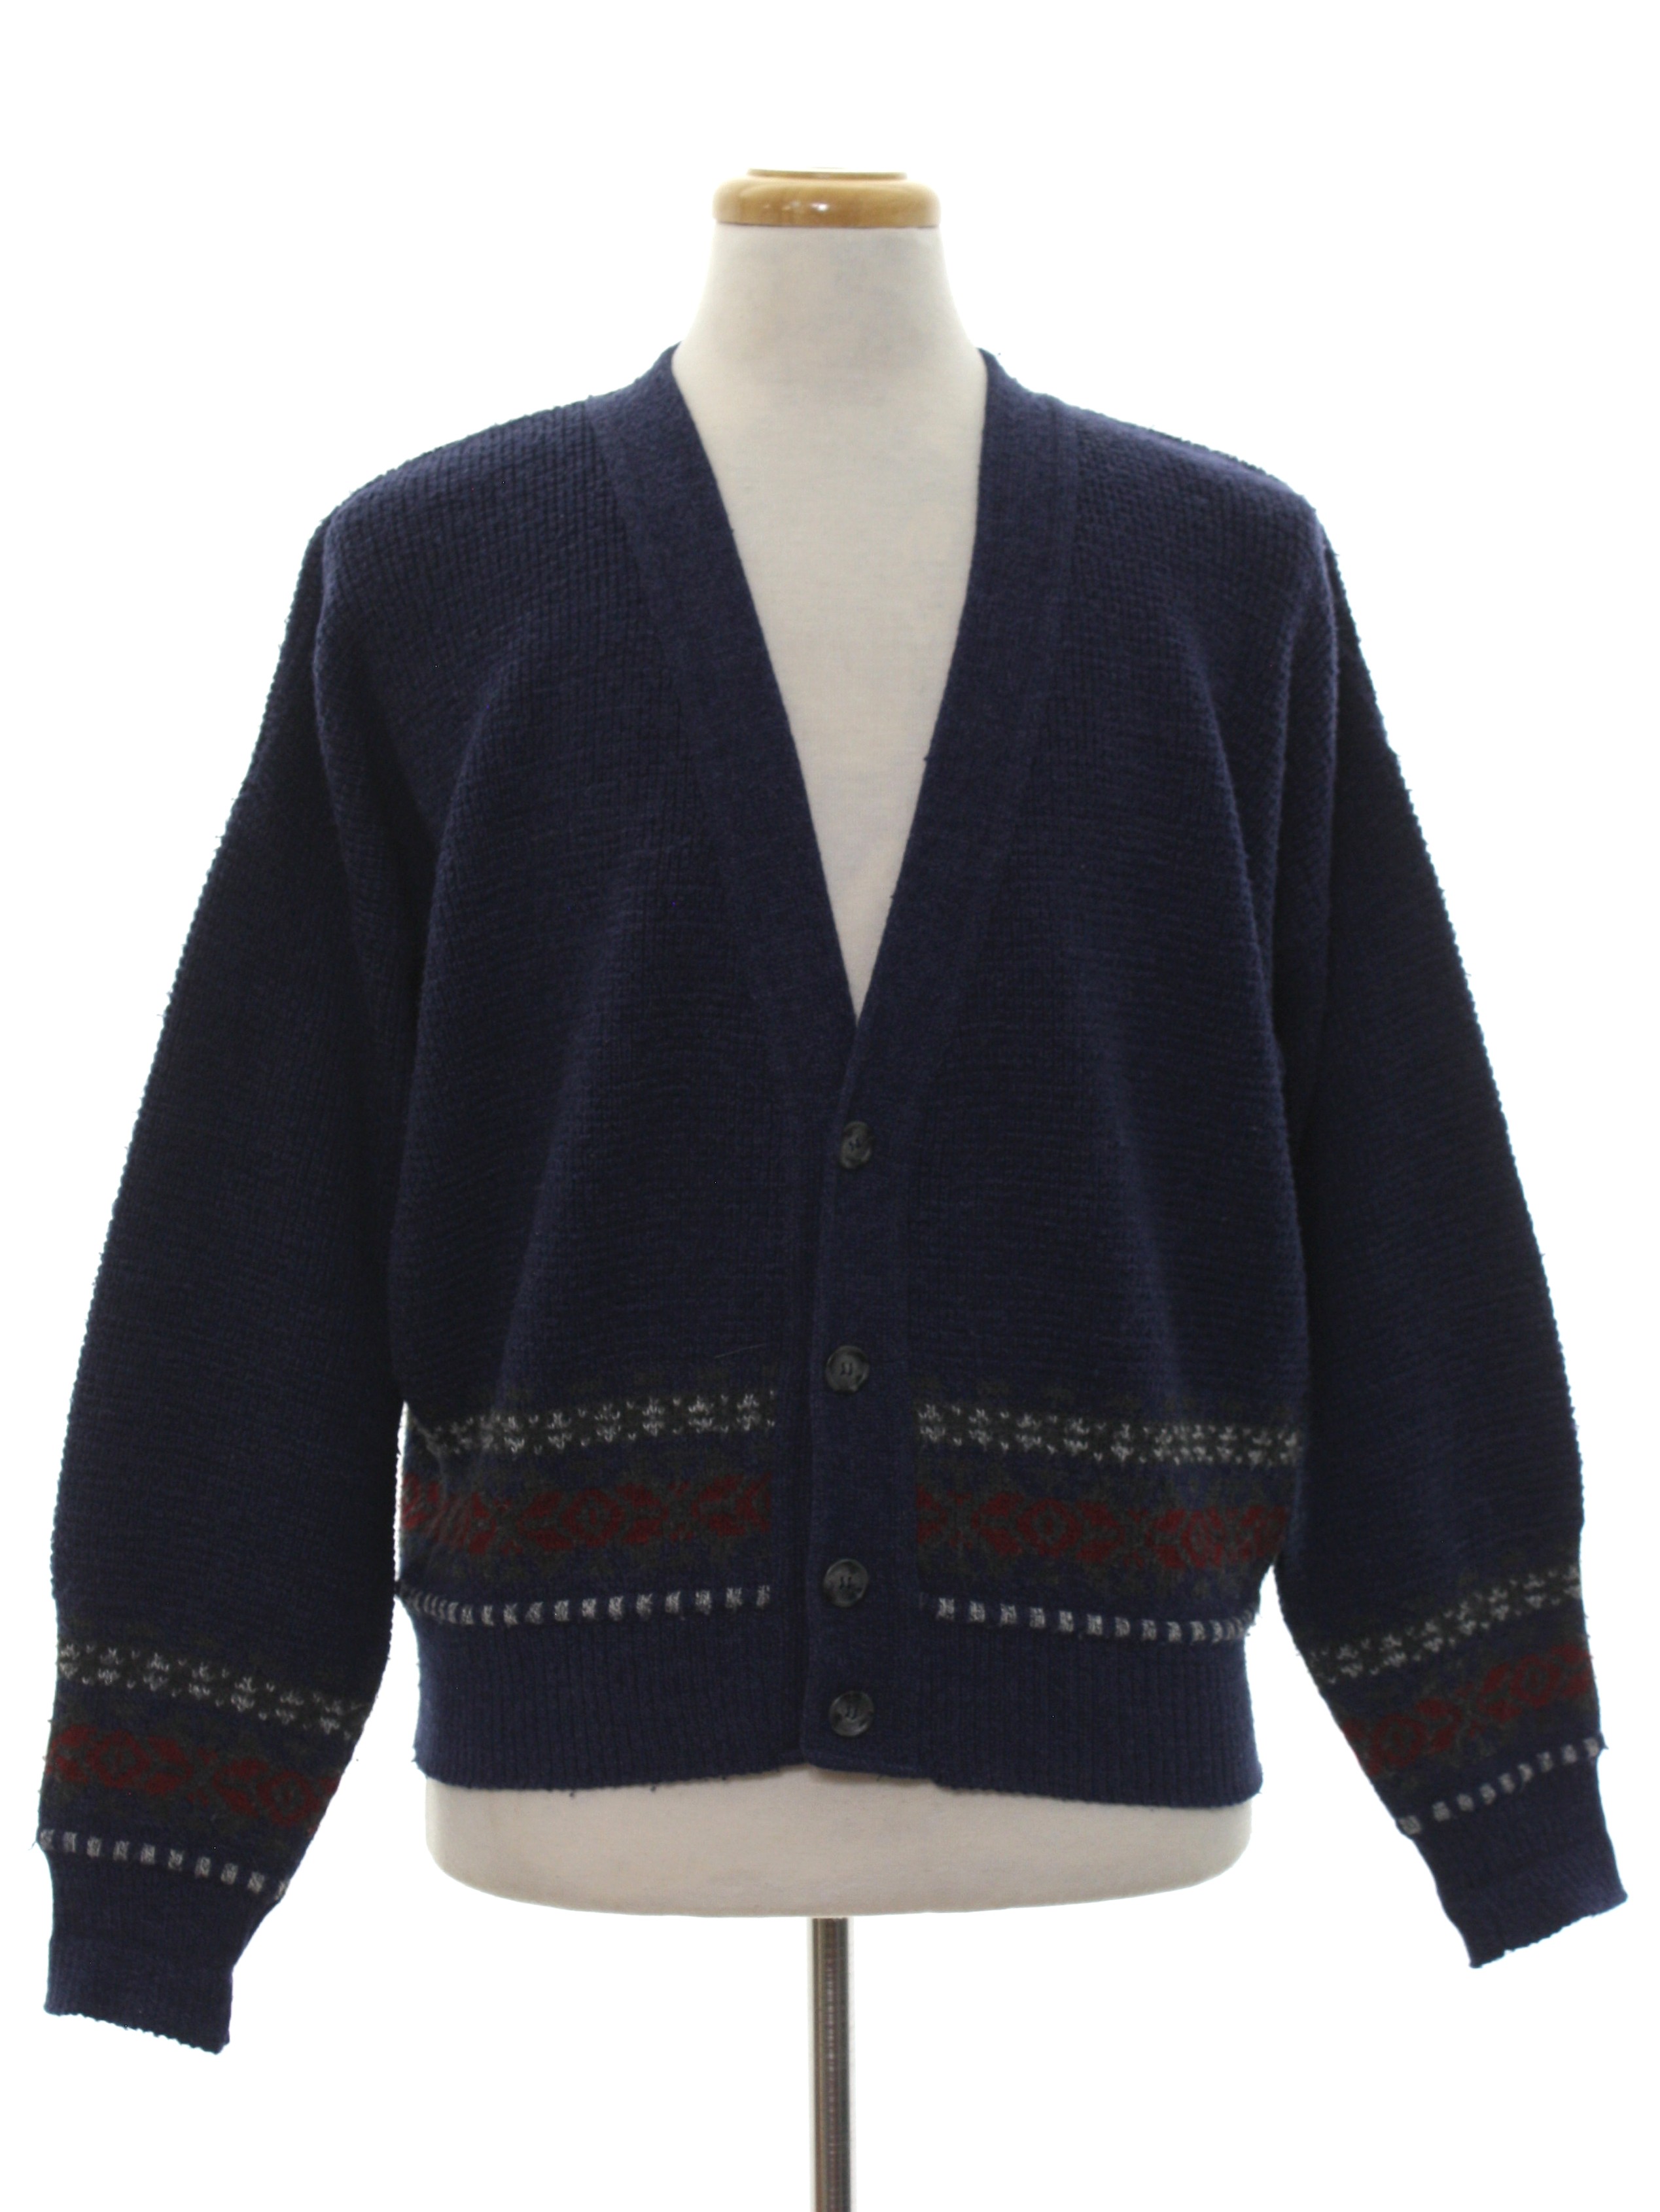 Retro Eighties Caridgan Sweater: 80s -John Ashford Made in Italy- Mens ...